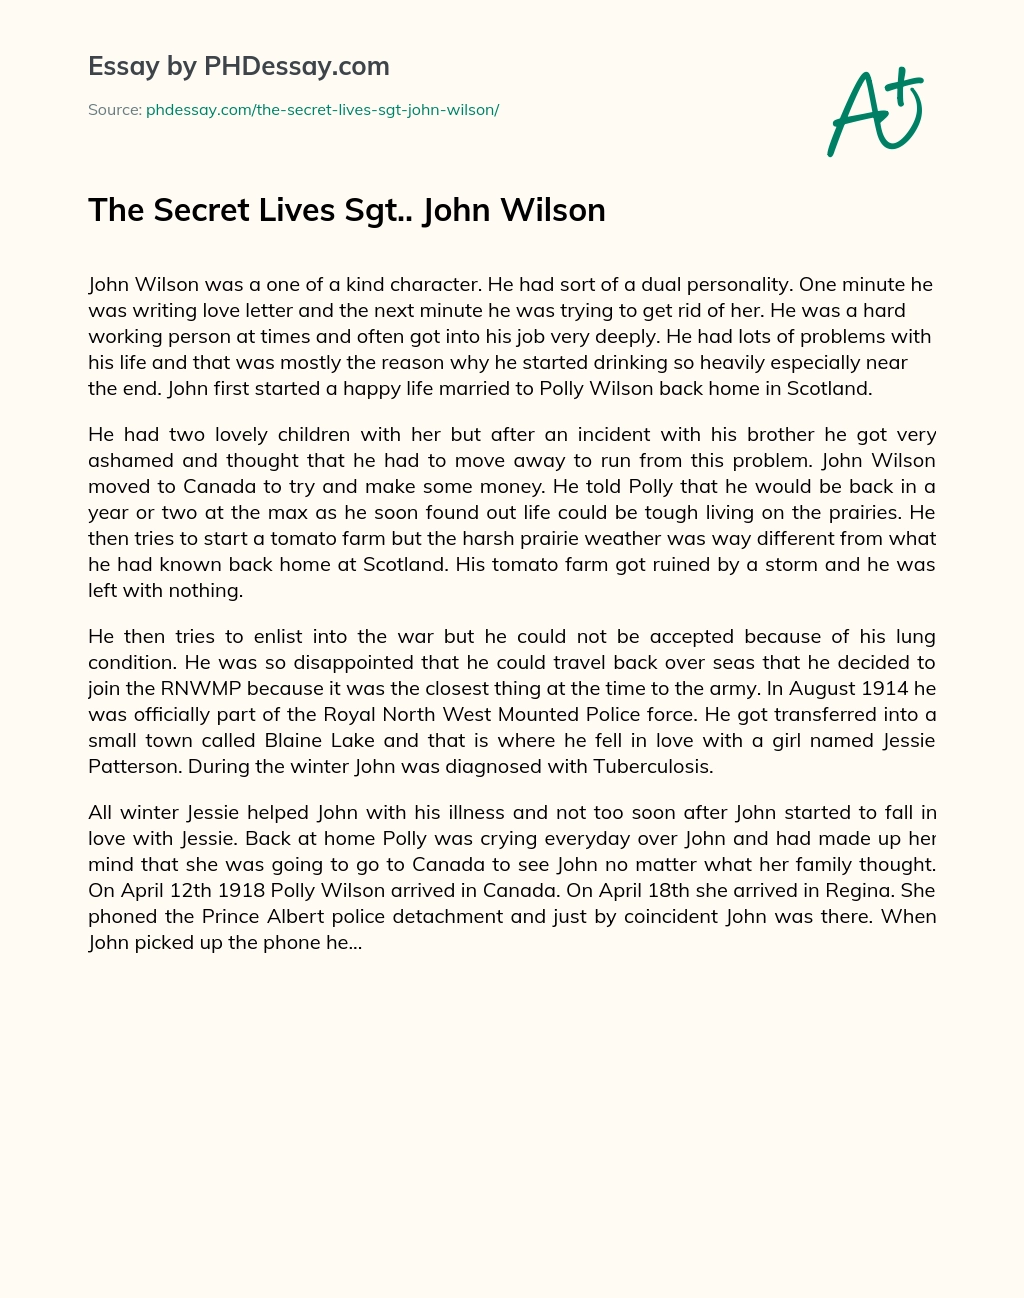 The Secret Lives Sgt.. John Wilson essay